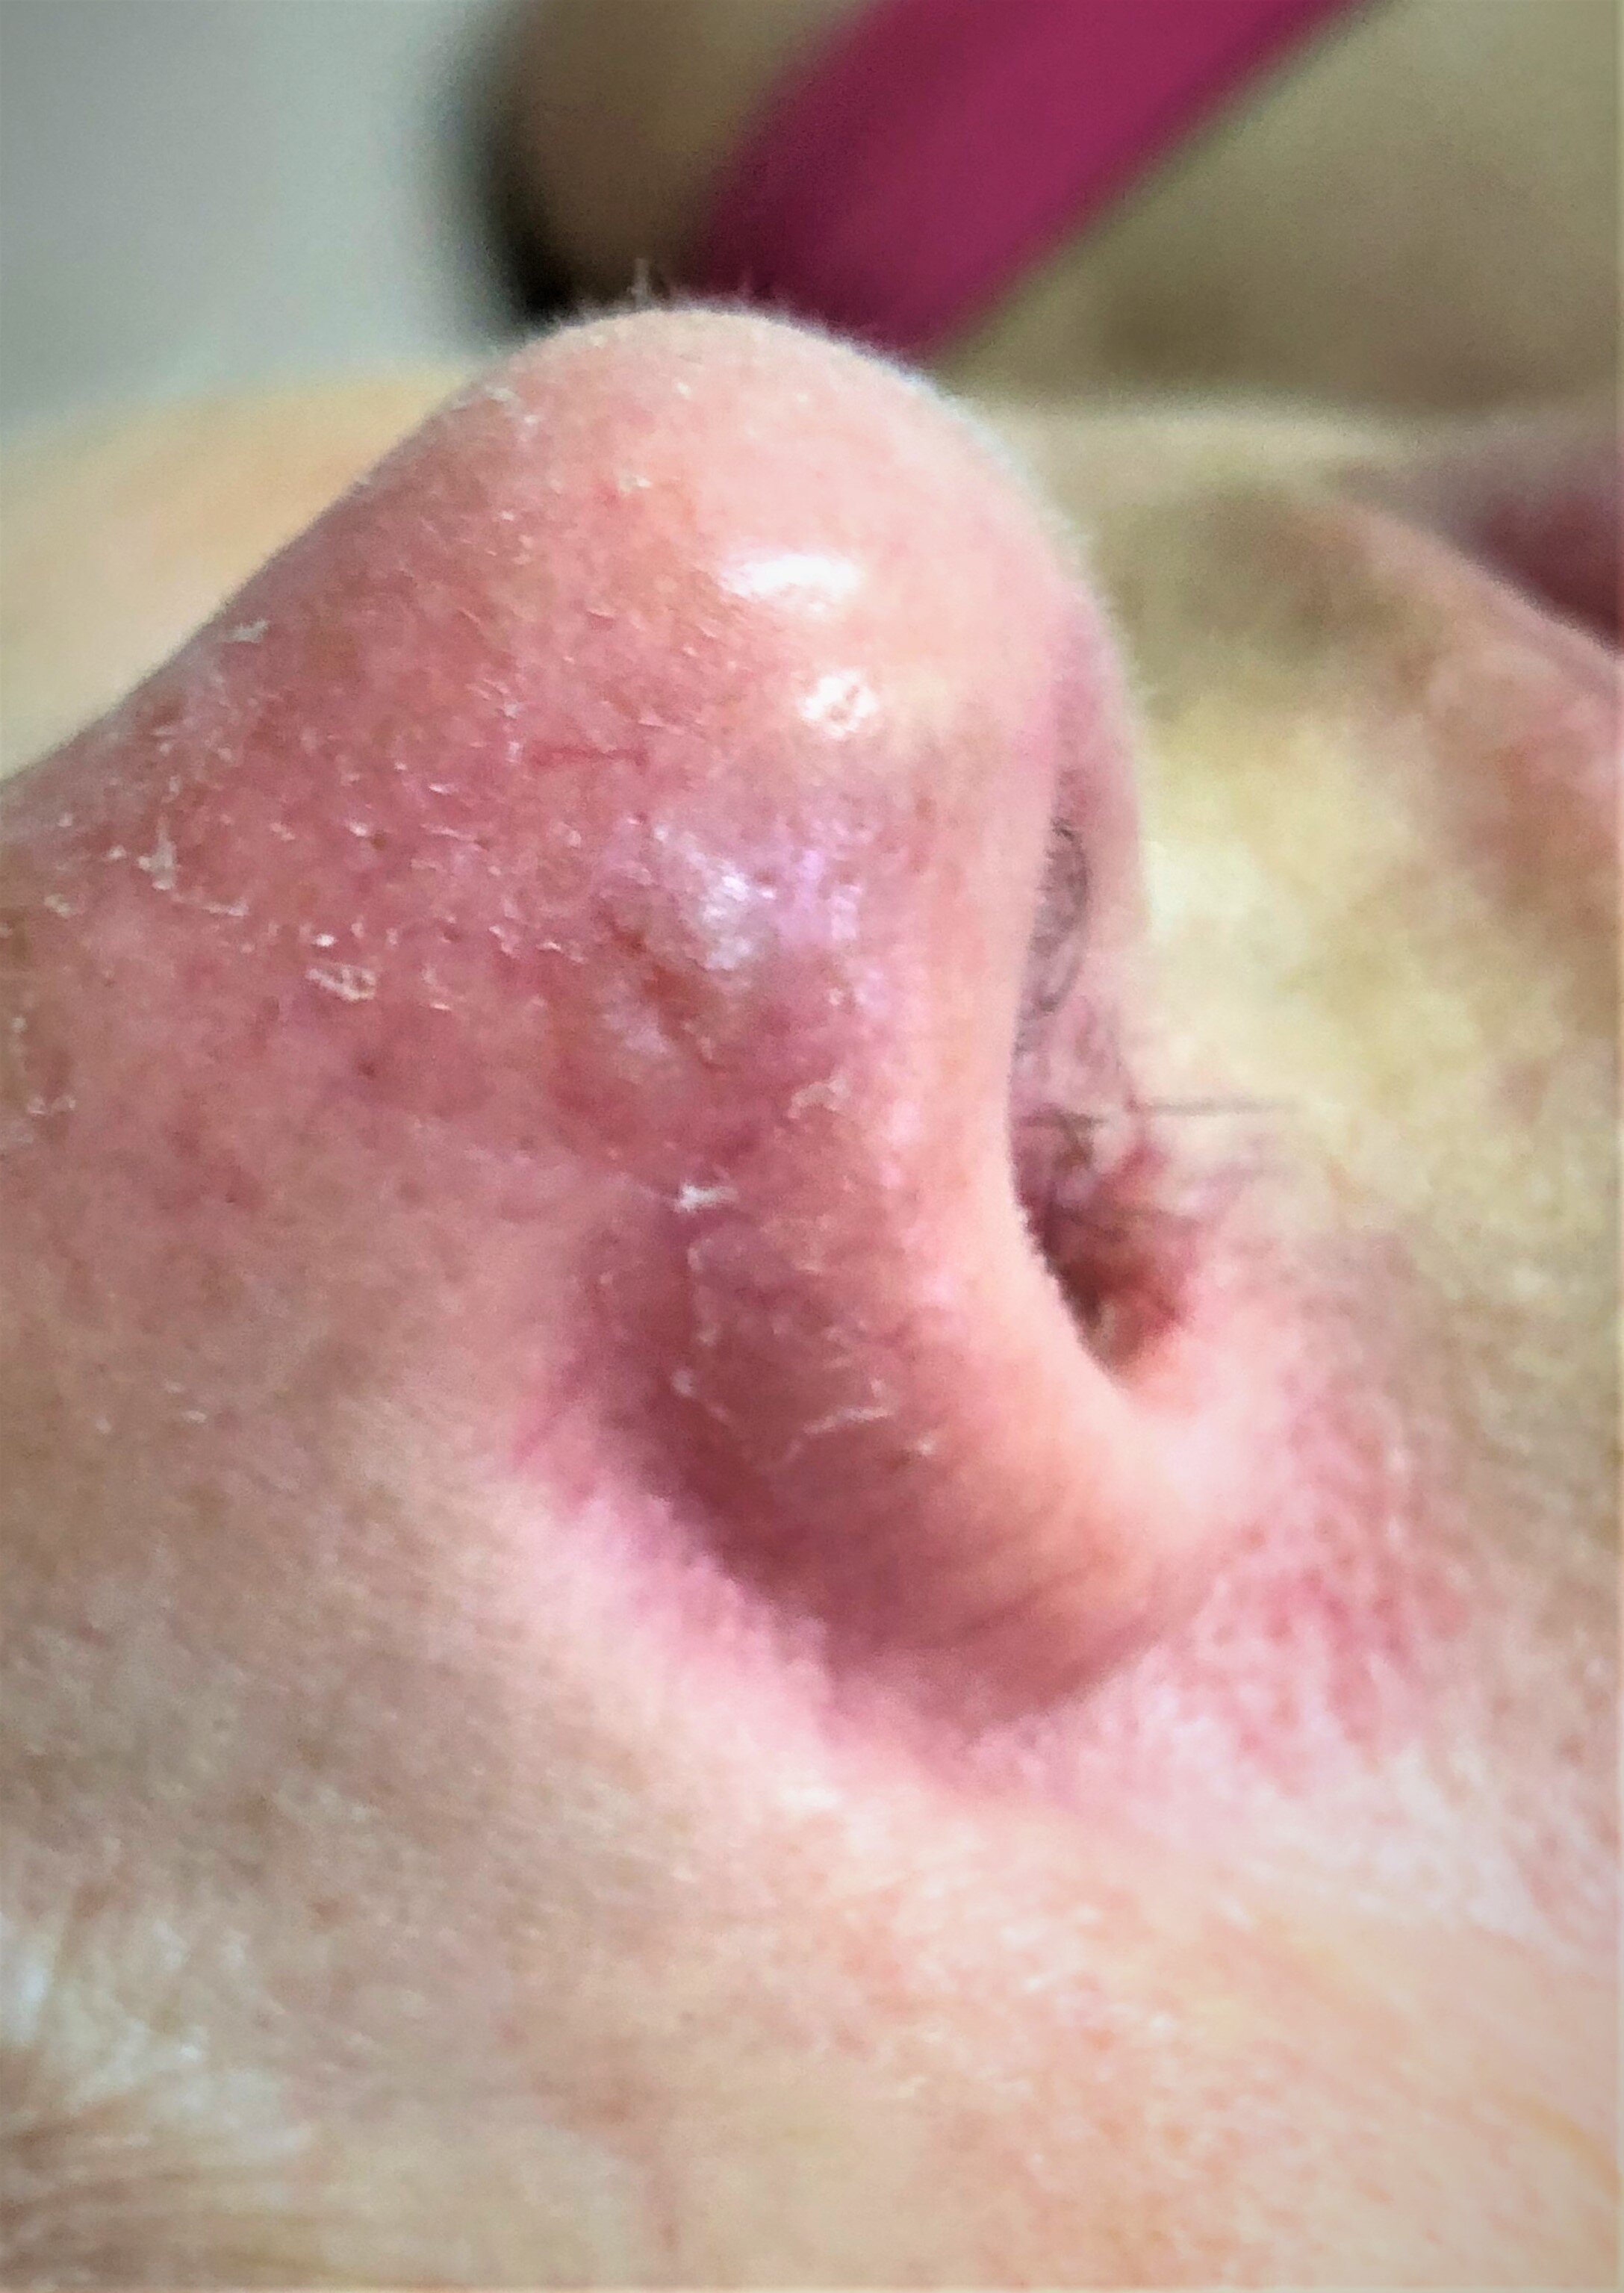 basal cell carcinoma nose scar